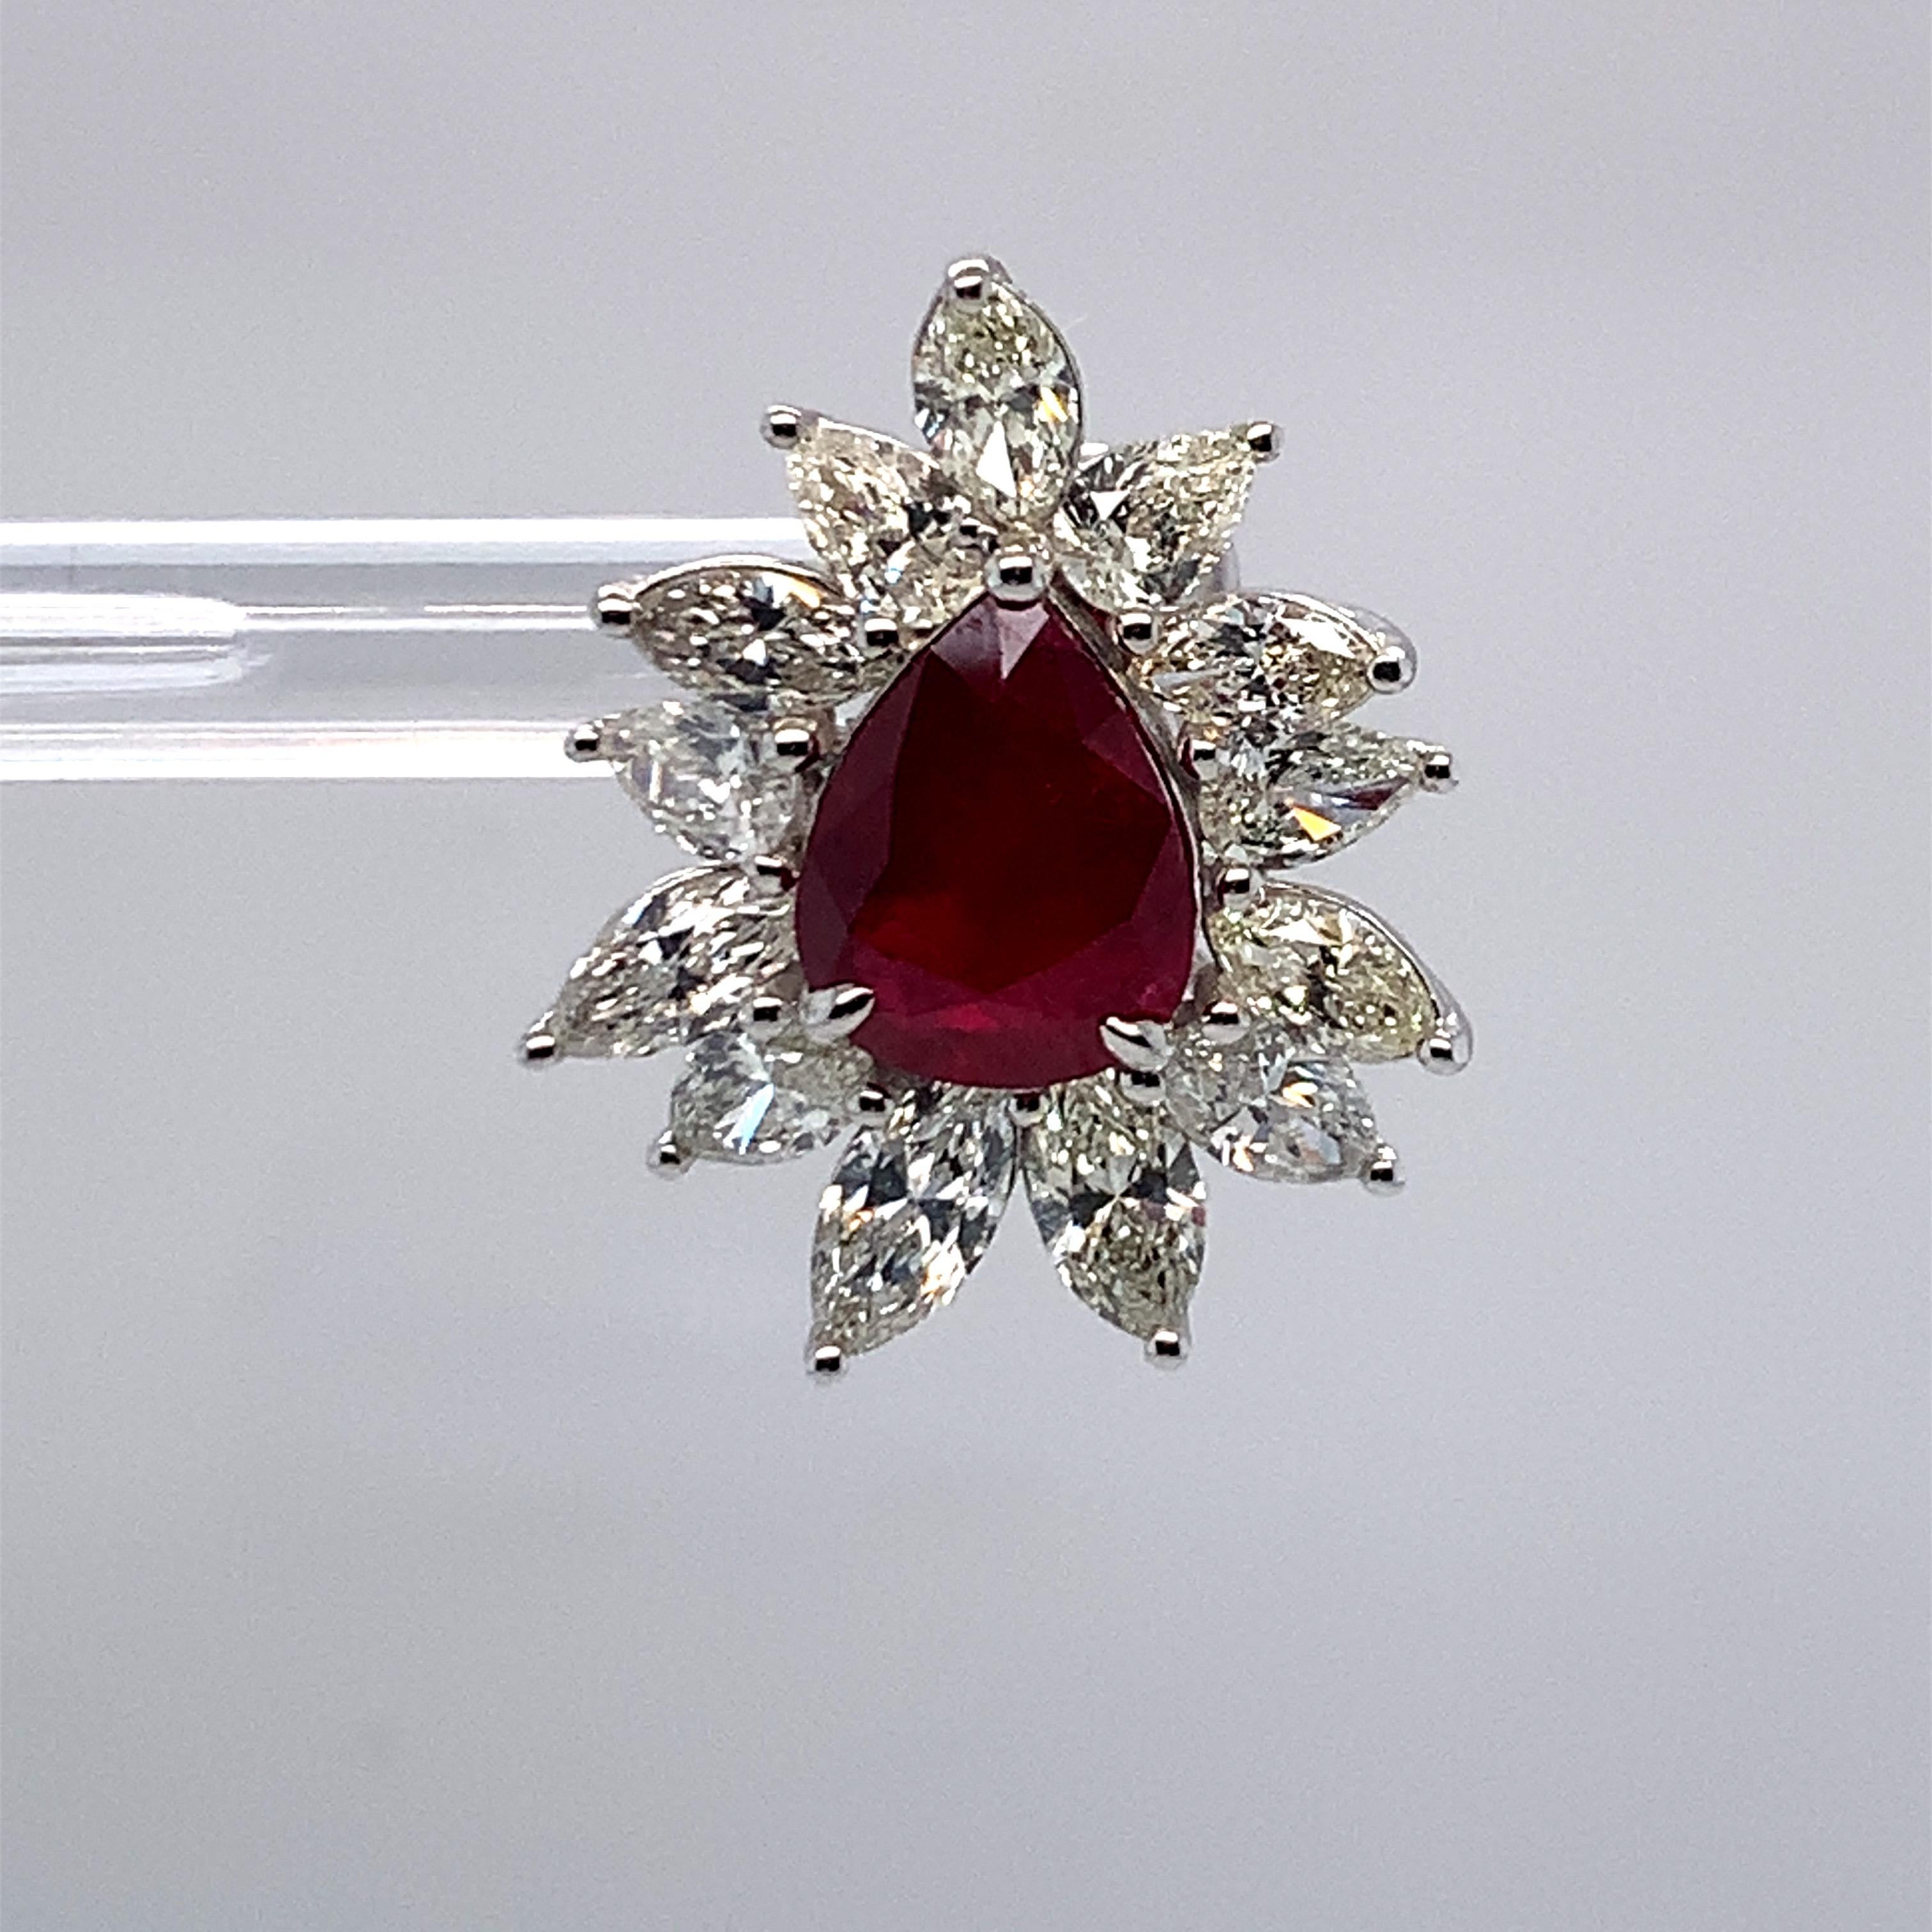 Artisan 4.62 Carat Ruby Diamond Stud Earrings in 14K White Gold